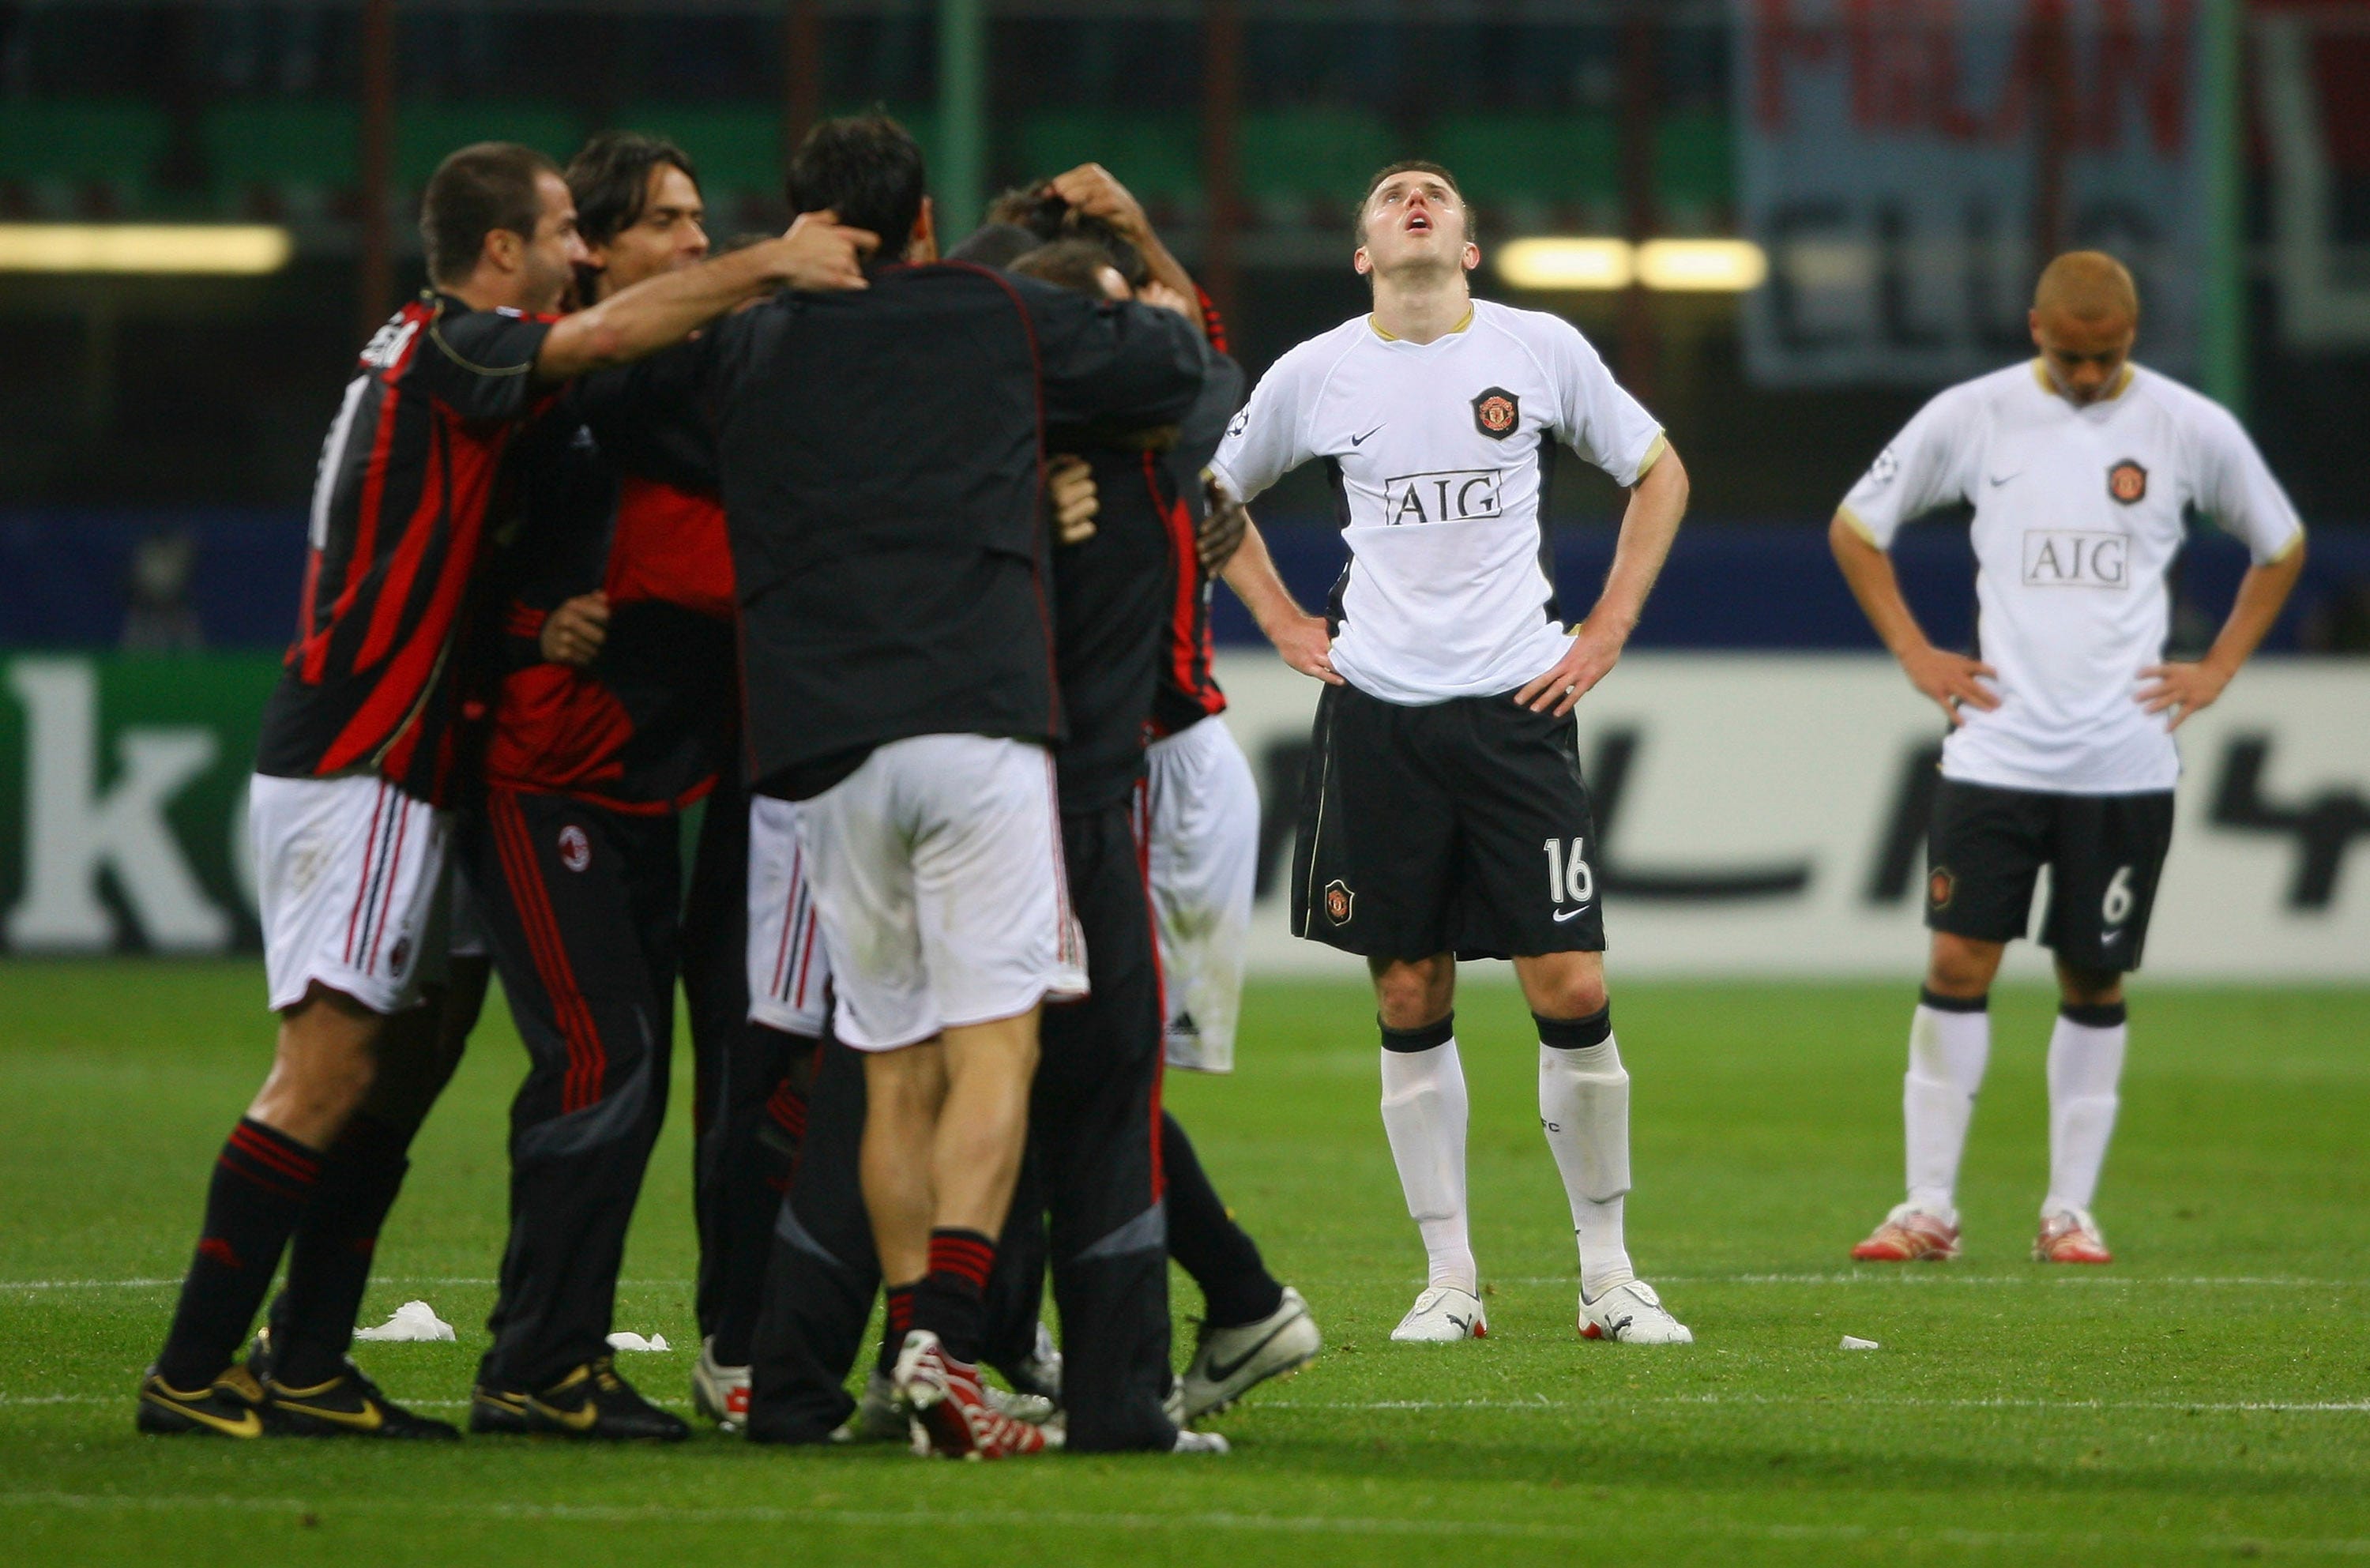 Milan Manchester United 2006 2007